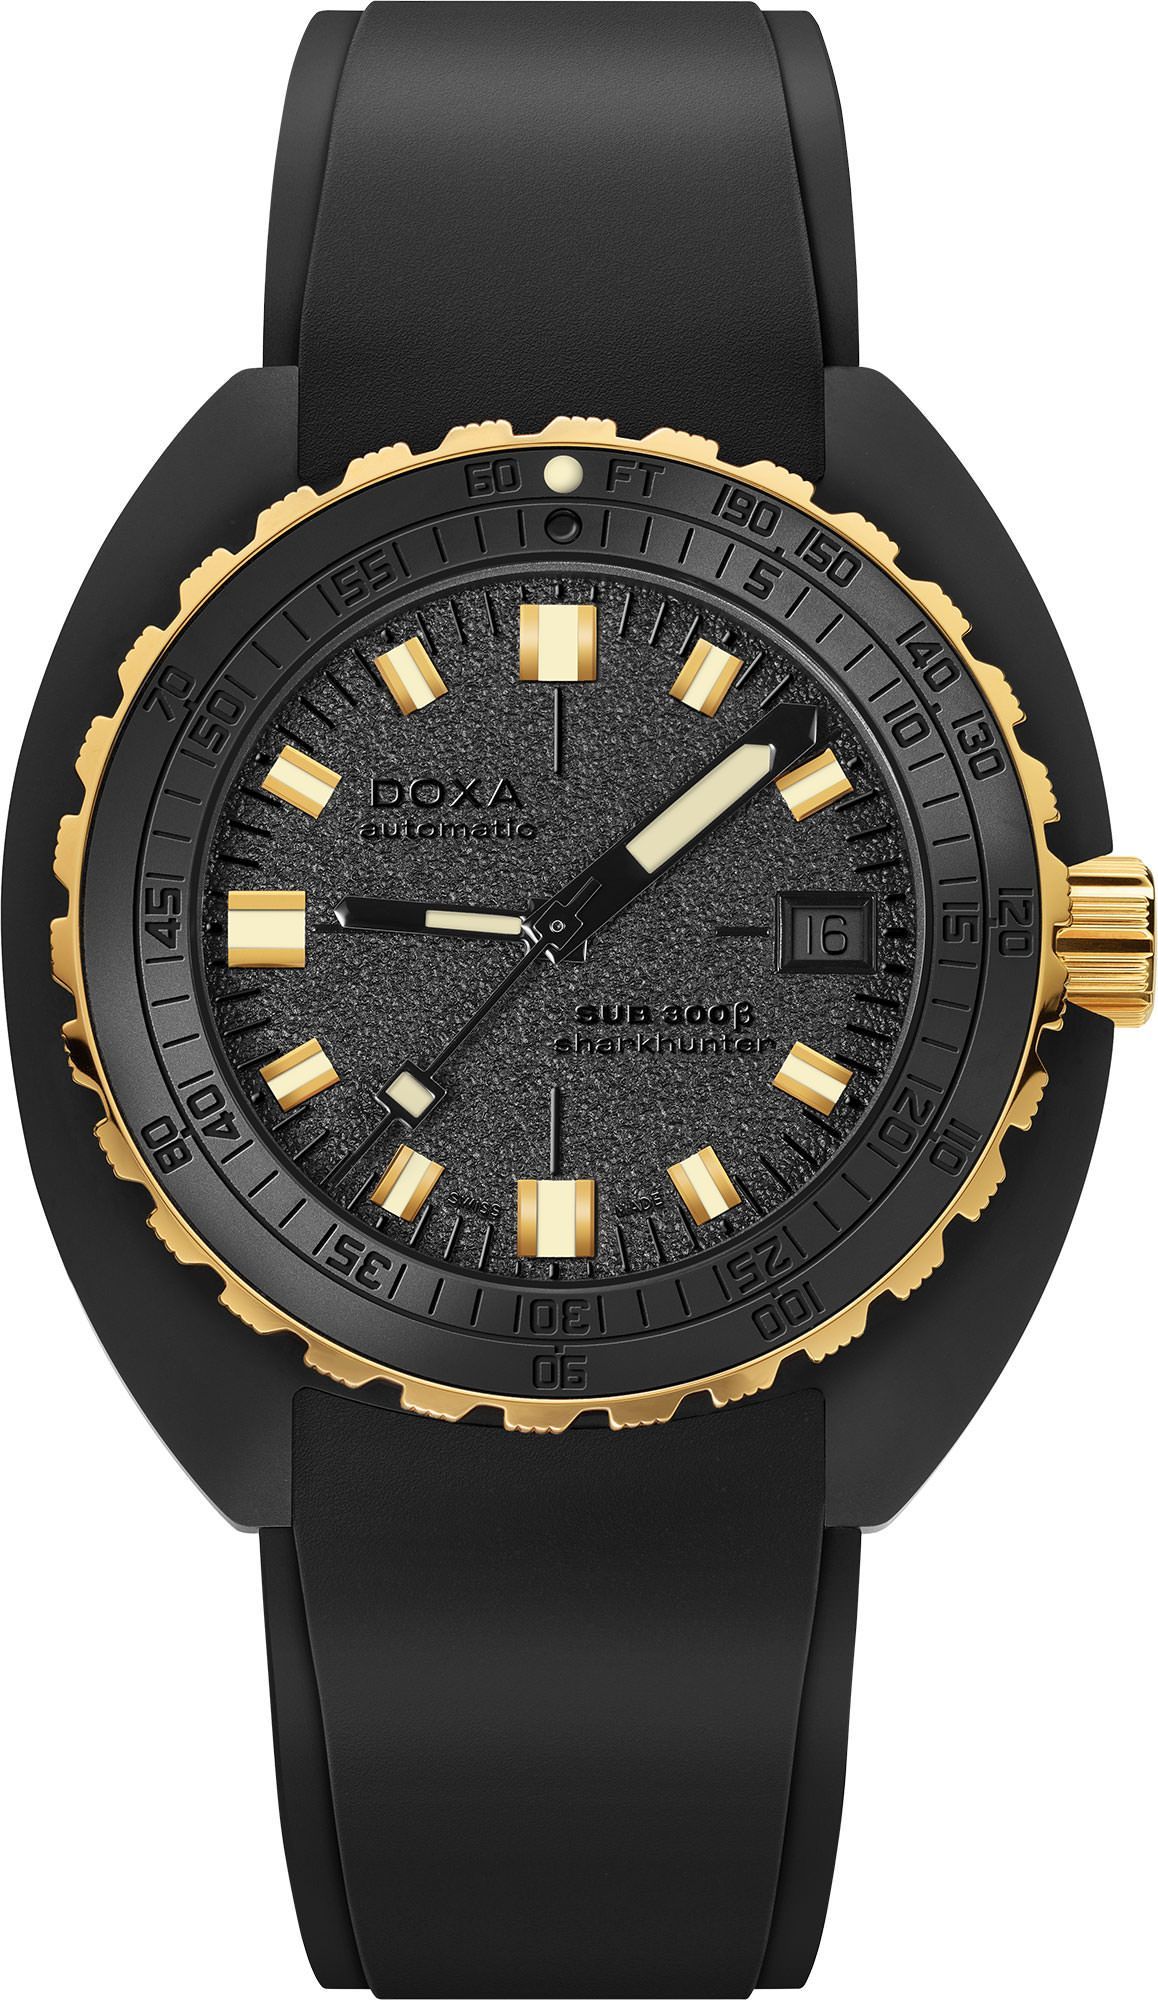 Doxa SUB 300 Beta Sharkhunter Black Dial 42.5 mm Automatic Watch For Men - 1